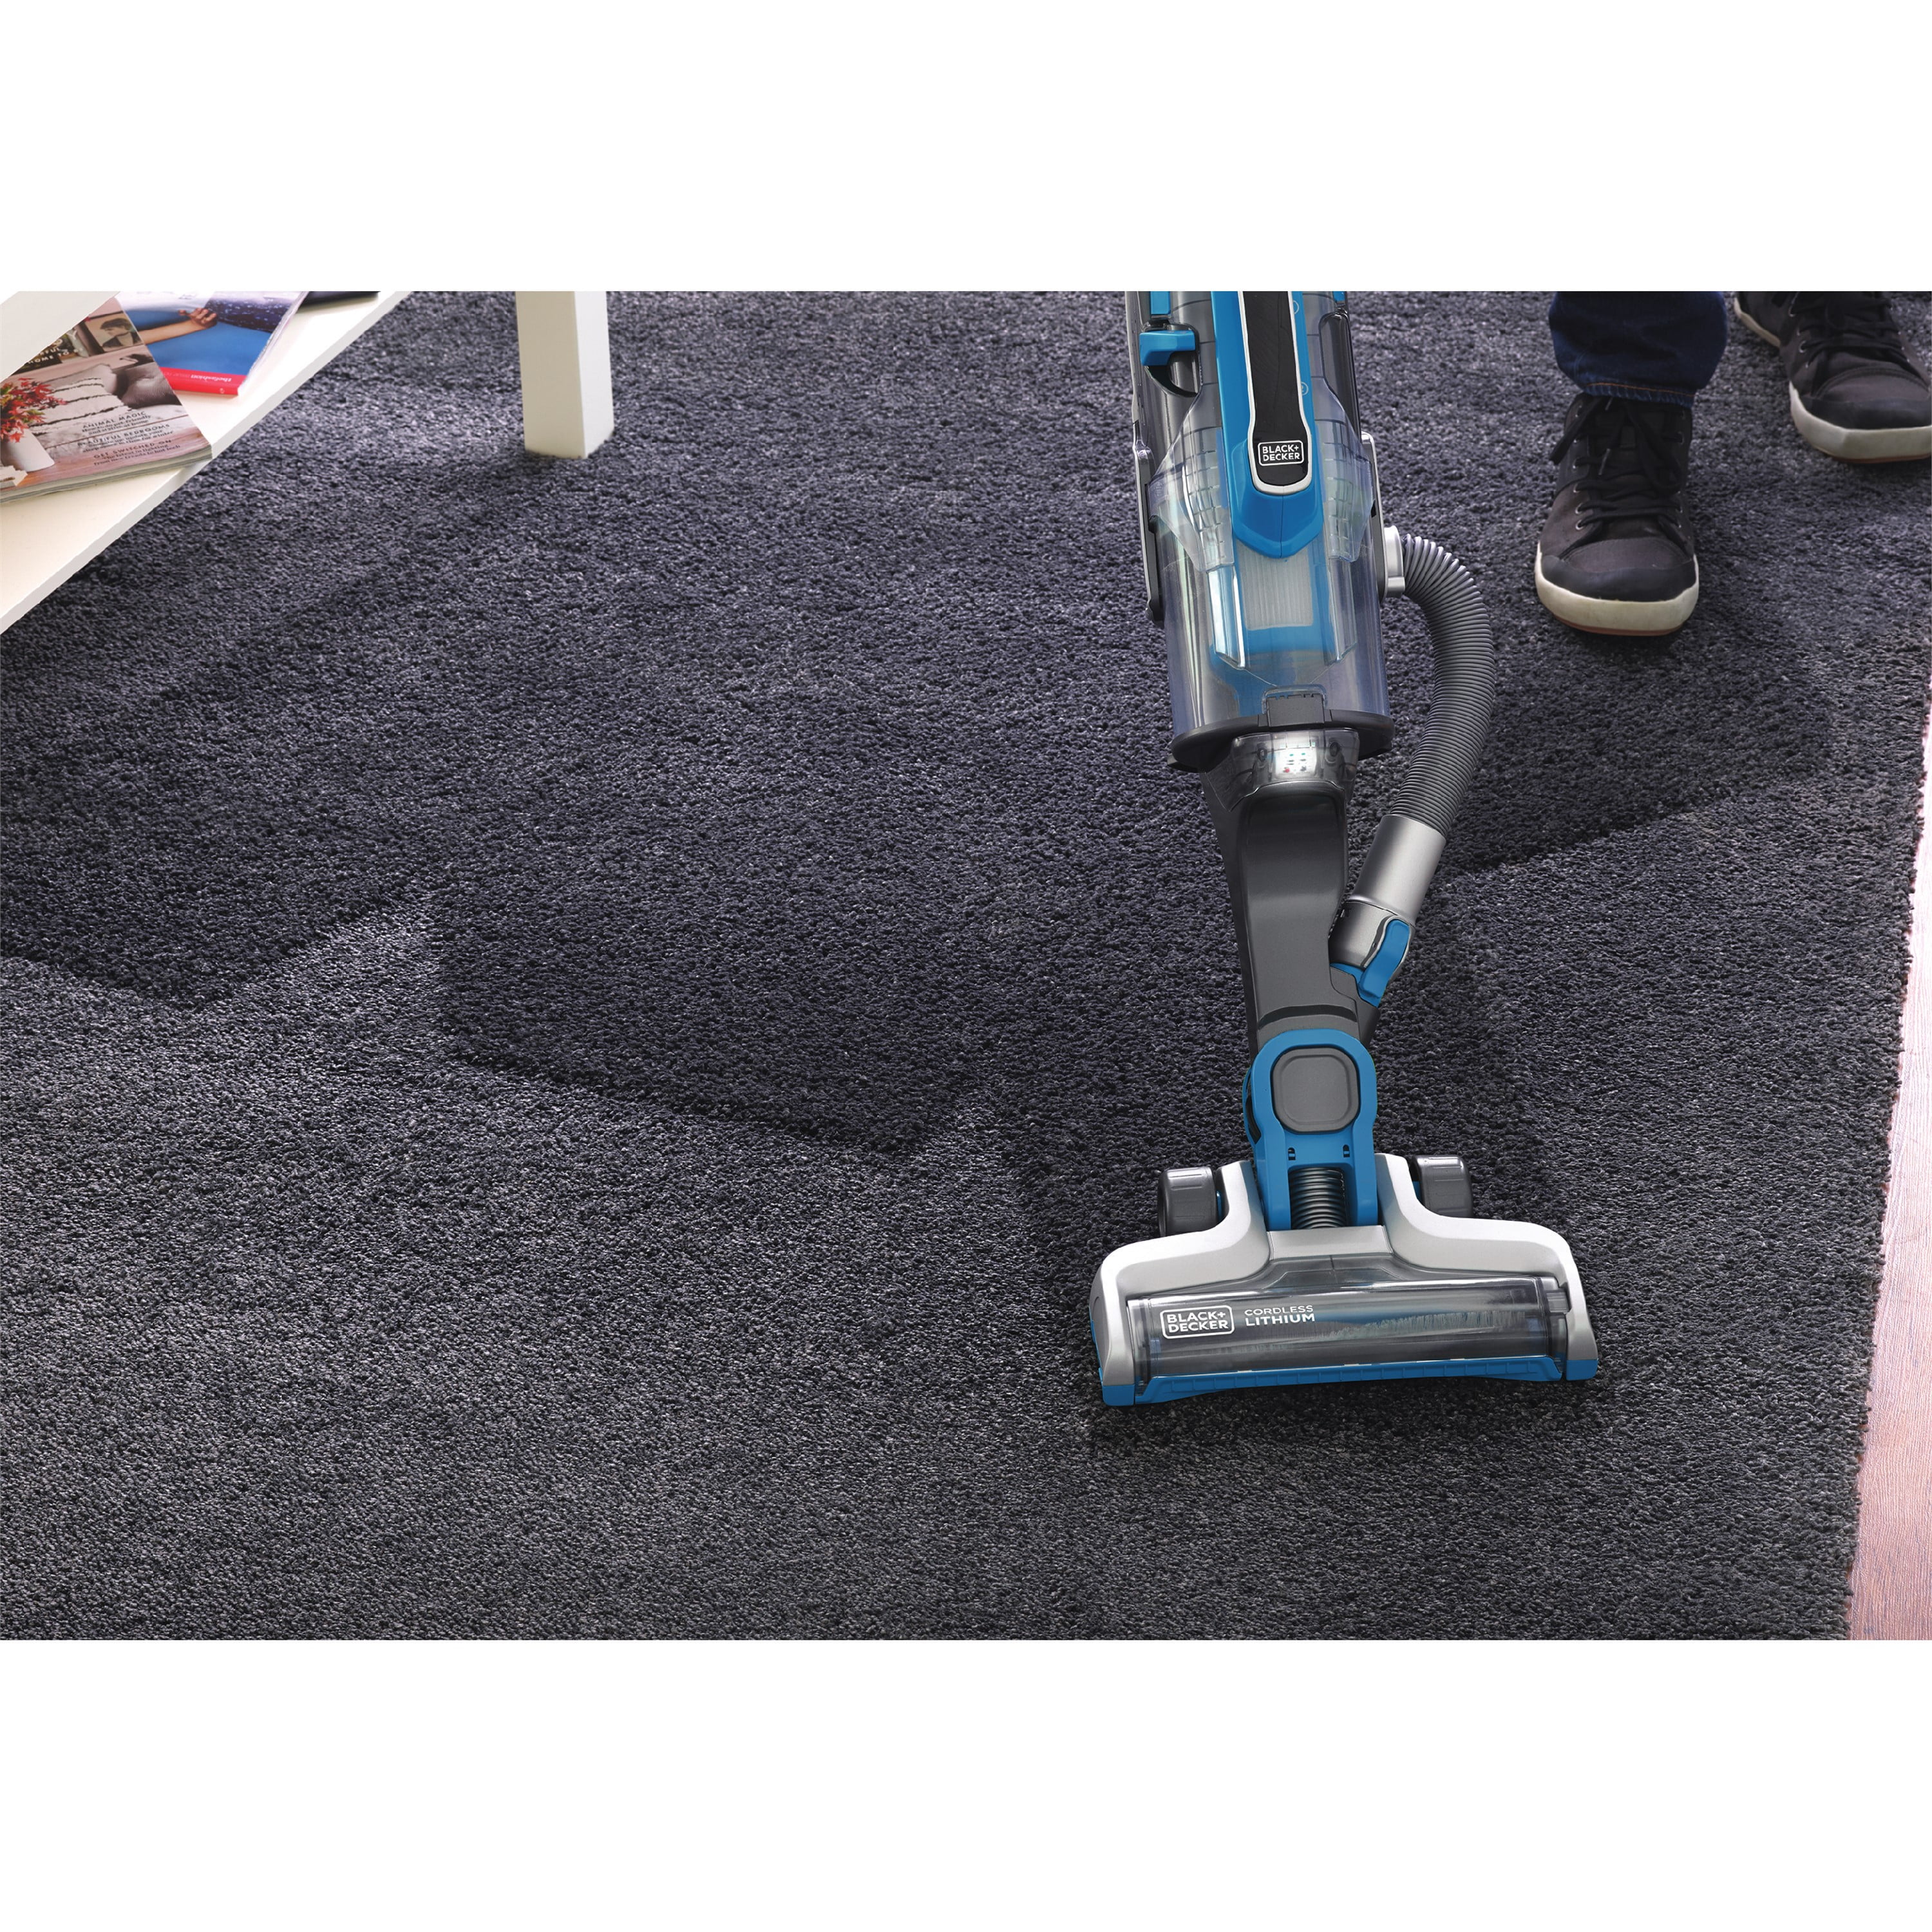 Powerseries Pro Cordless Vacuum, 2 In 1, Blue